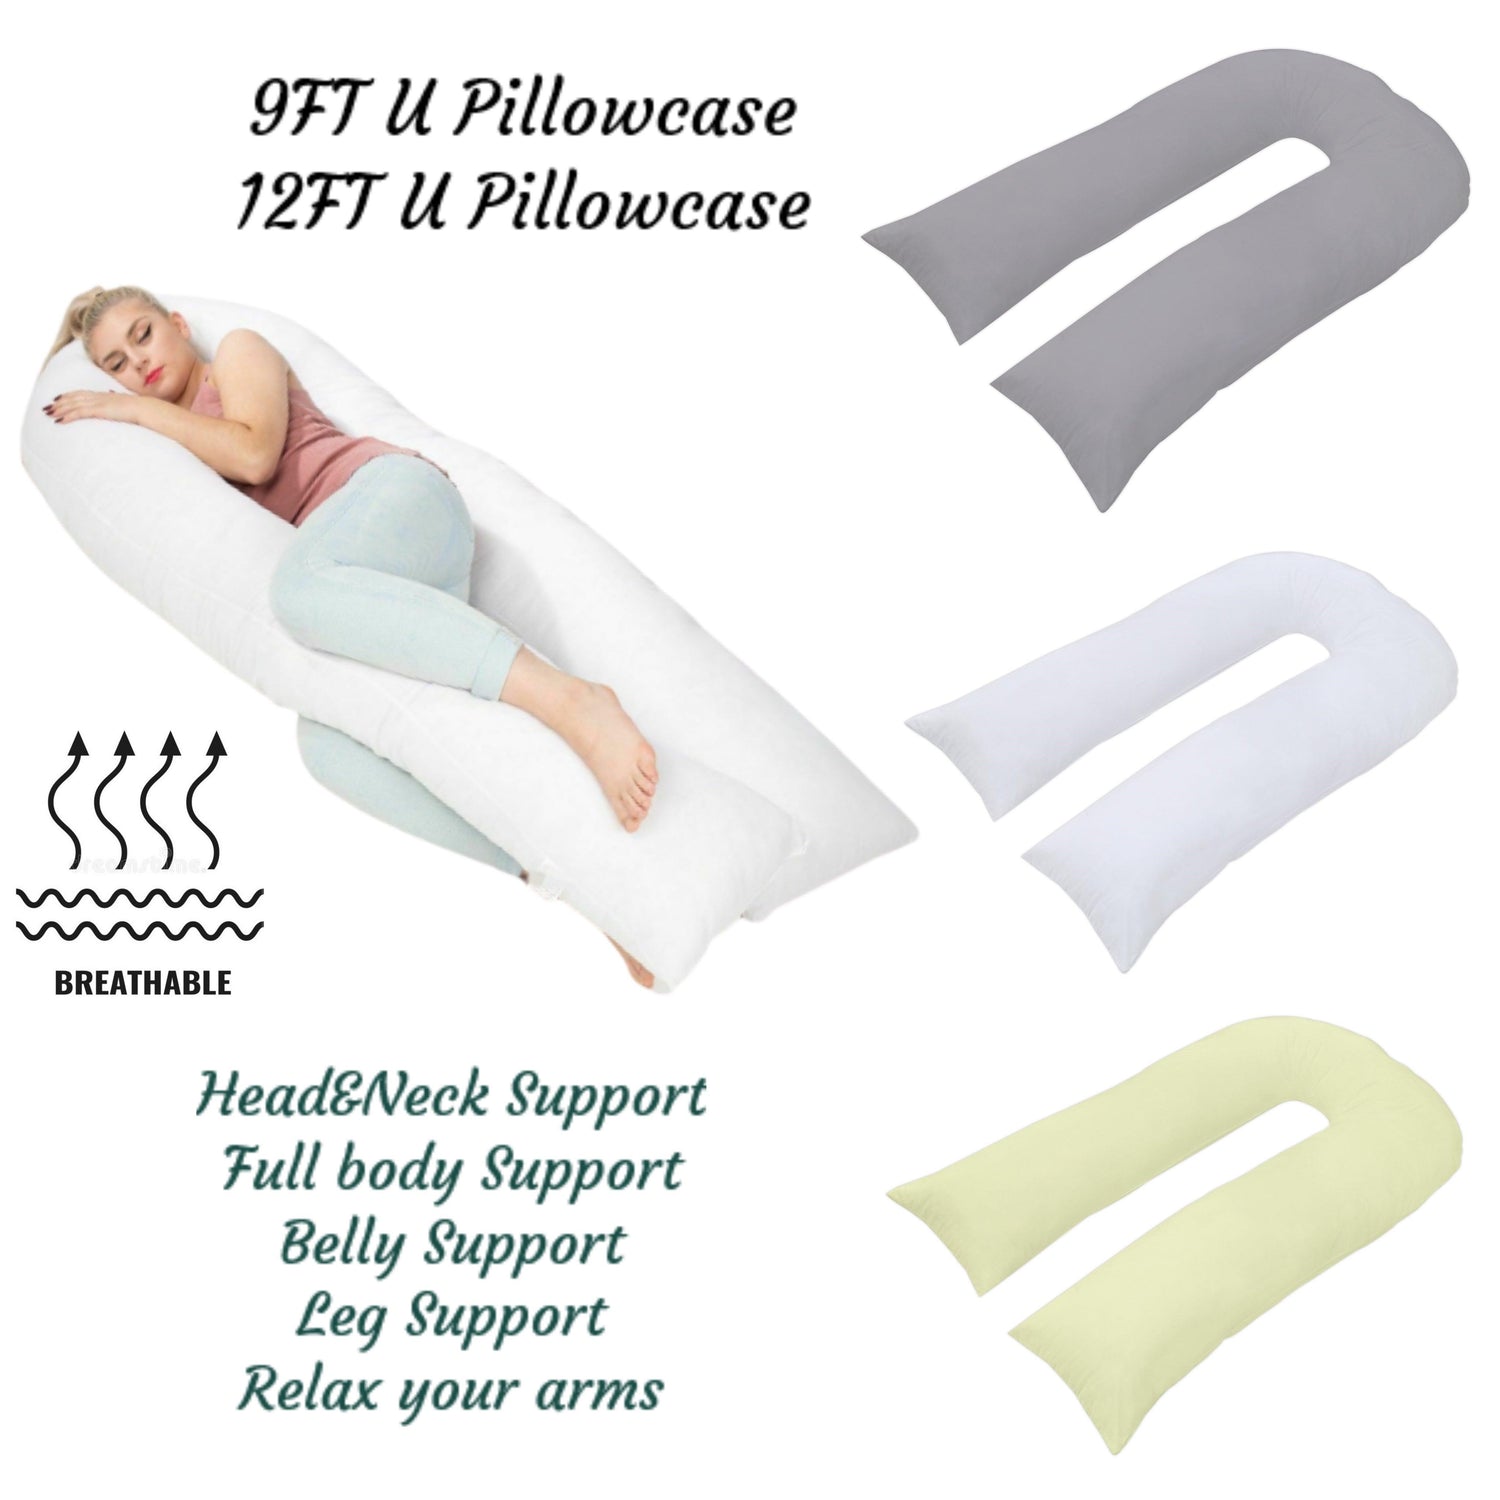 9ft/12ft U Pillowcase